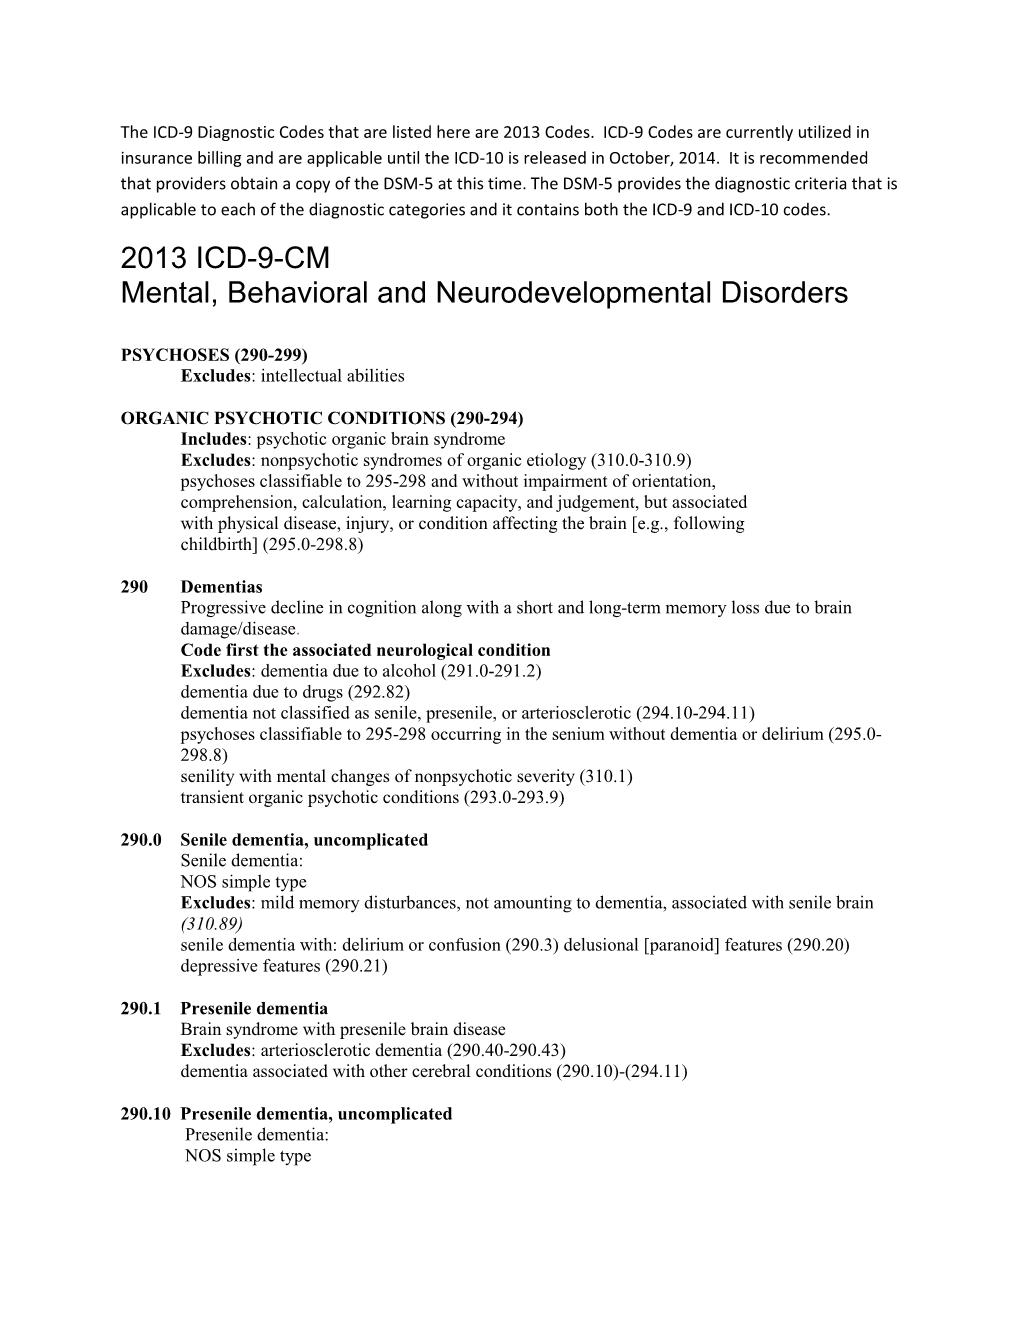 2013 ICD-9-CM Mental, Behavioral and Neurodevelopmental Disorders